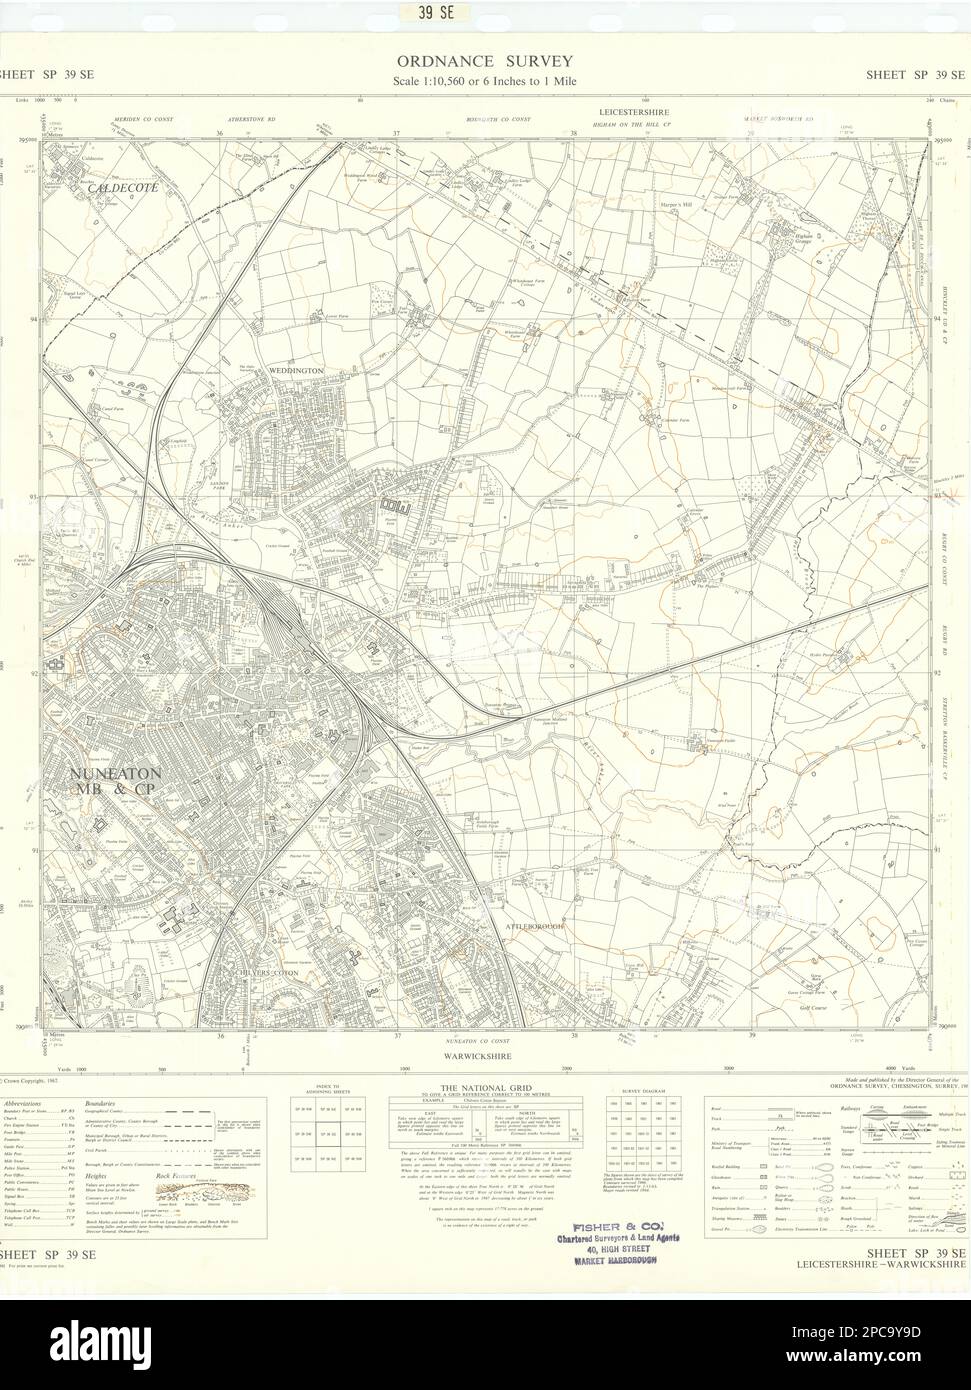 Ordnance Survey SP39SE Leicestershire Numeaton Weddington Caldecote 1967 mapa Foto de stock